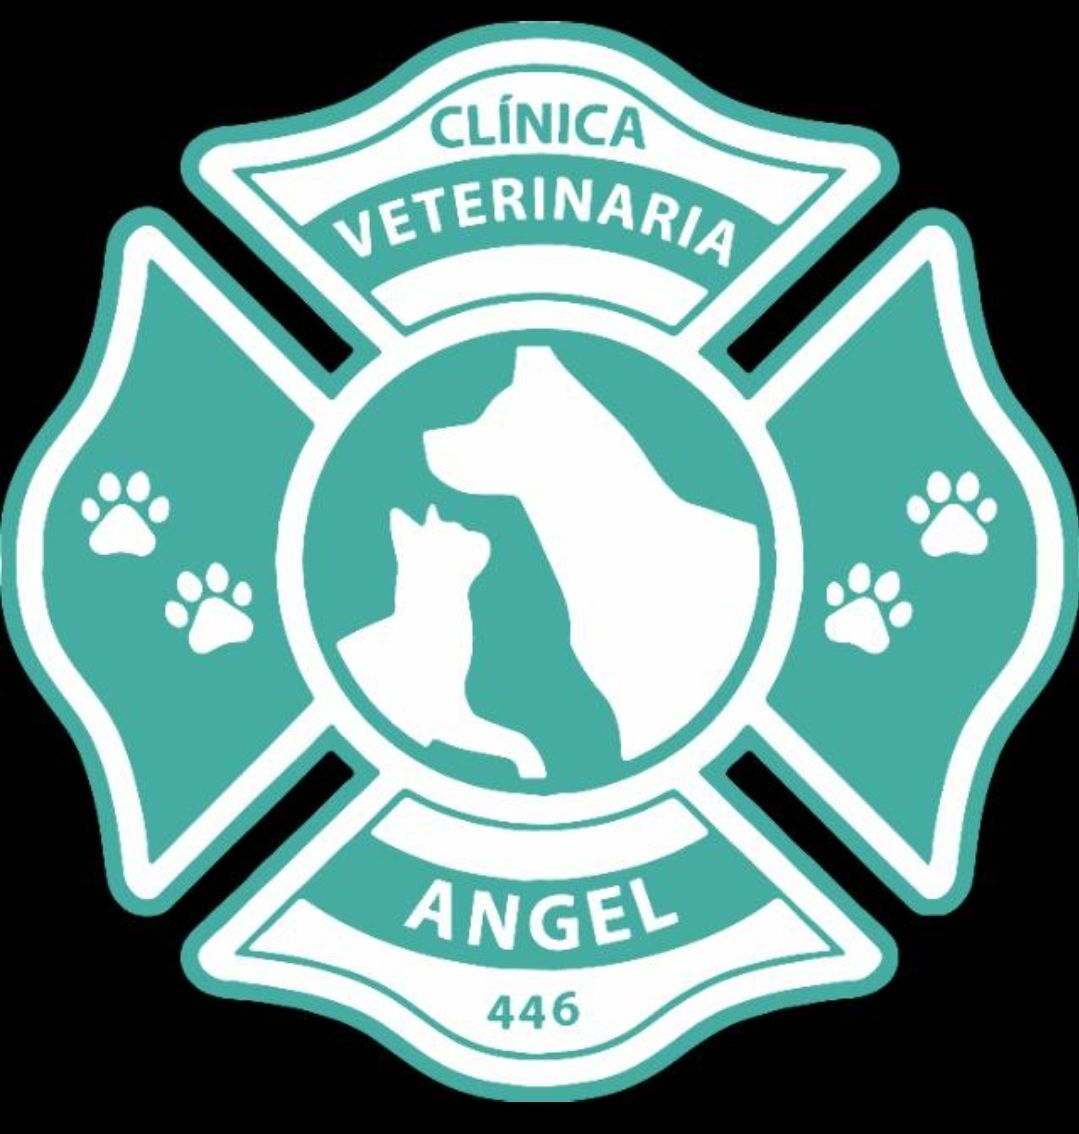 Veterinaria Angel 446